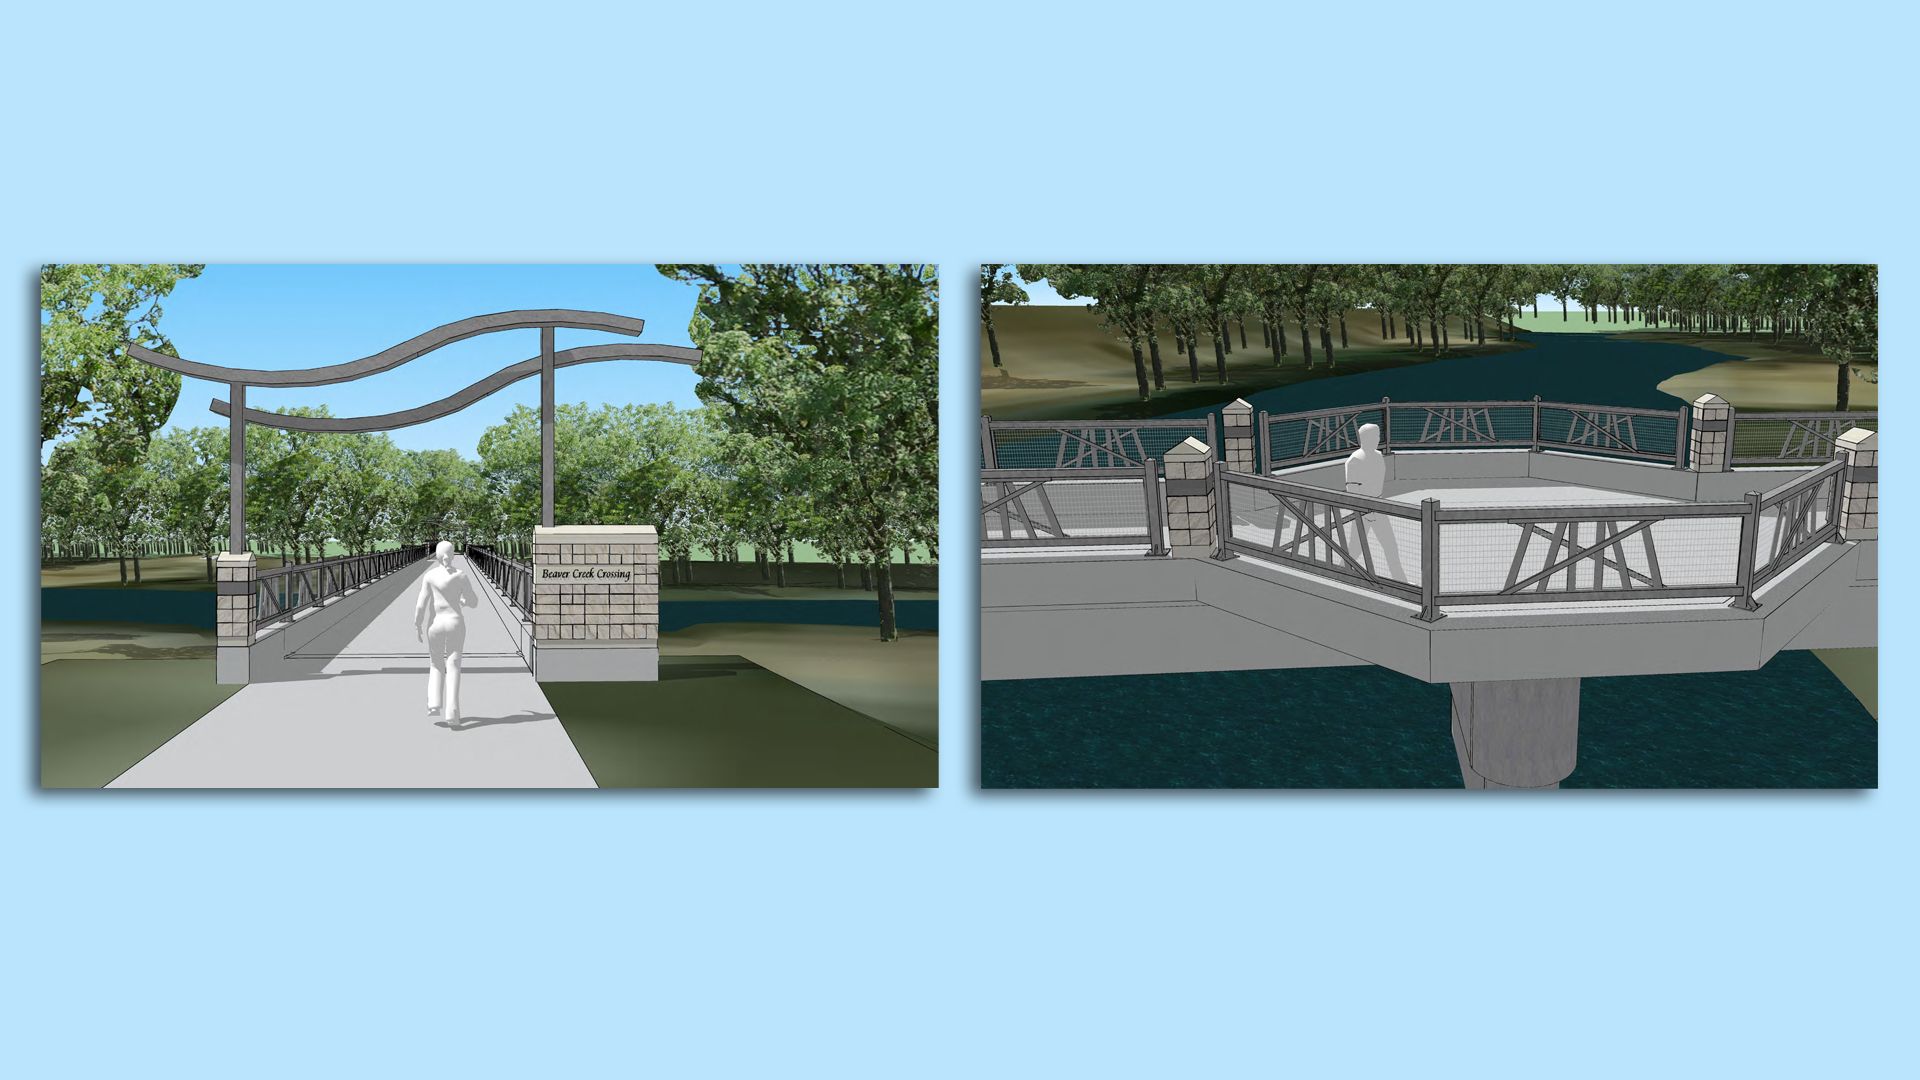 An illustration of the Trestle bridge rebuild plan.